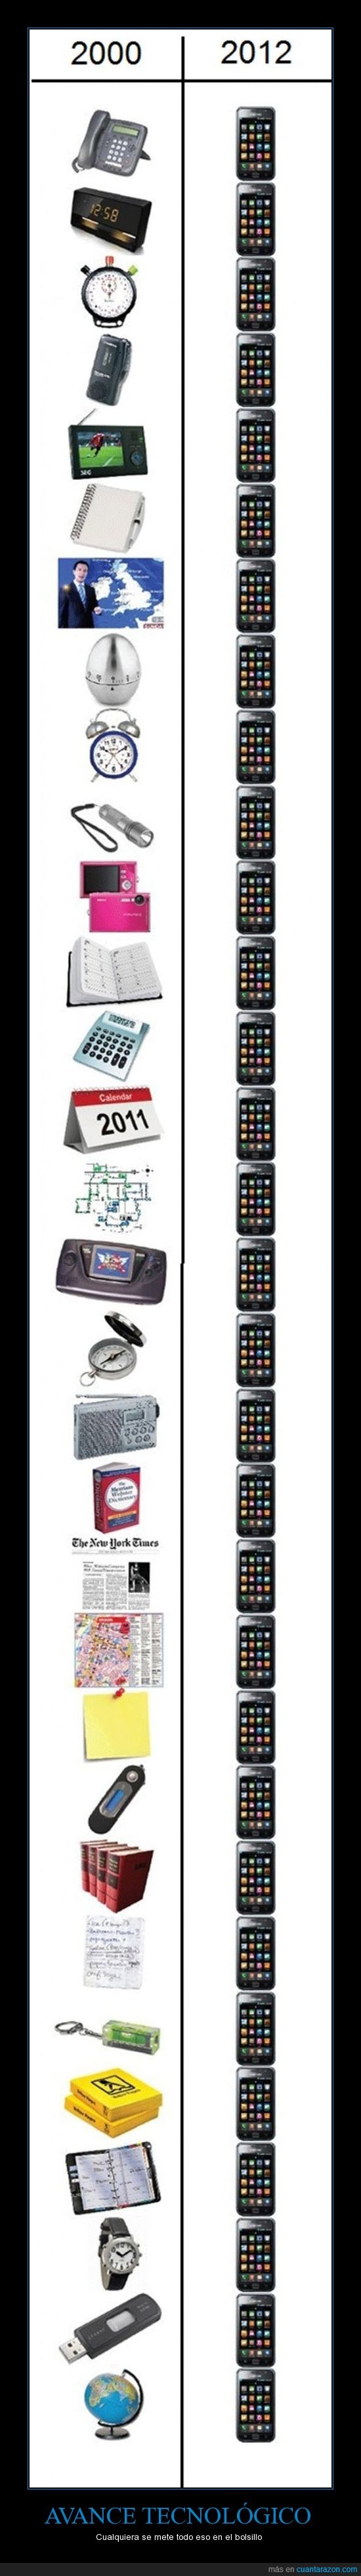 iPod,iPhone,Gadgets,antes,ahora